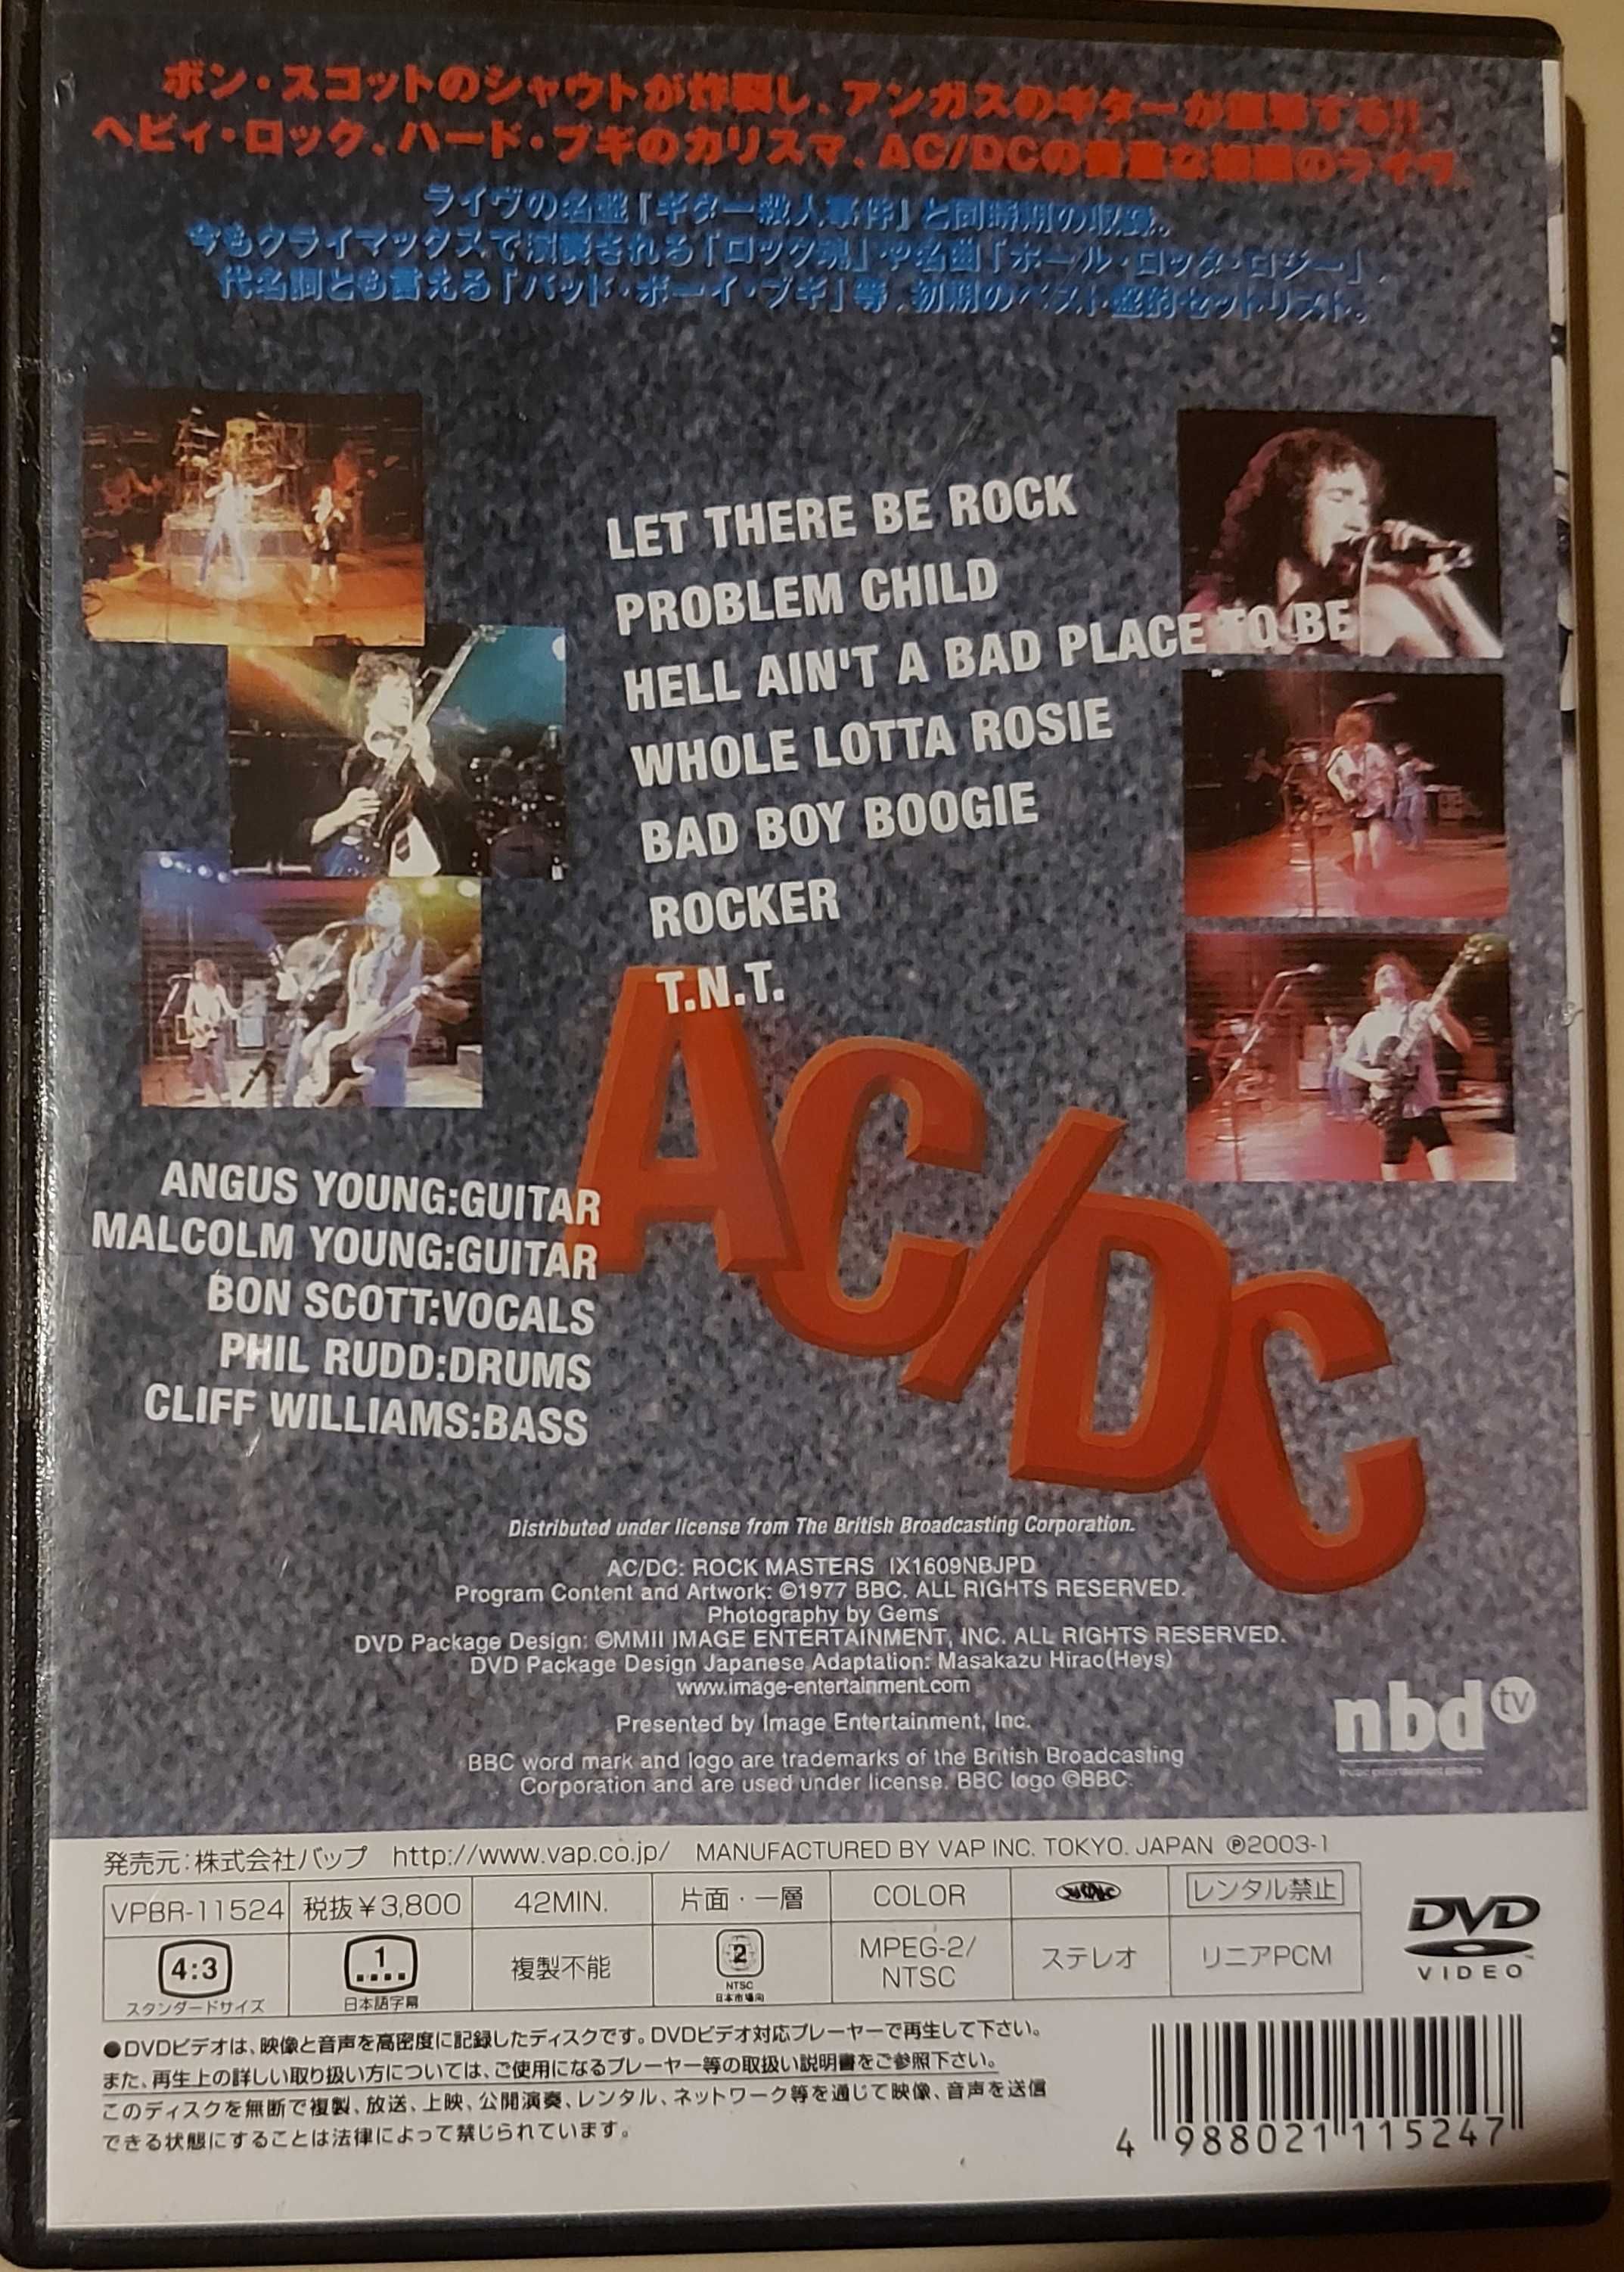 AC/DC Live at River Plate 2 CD digipack